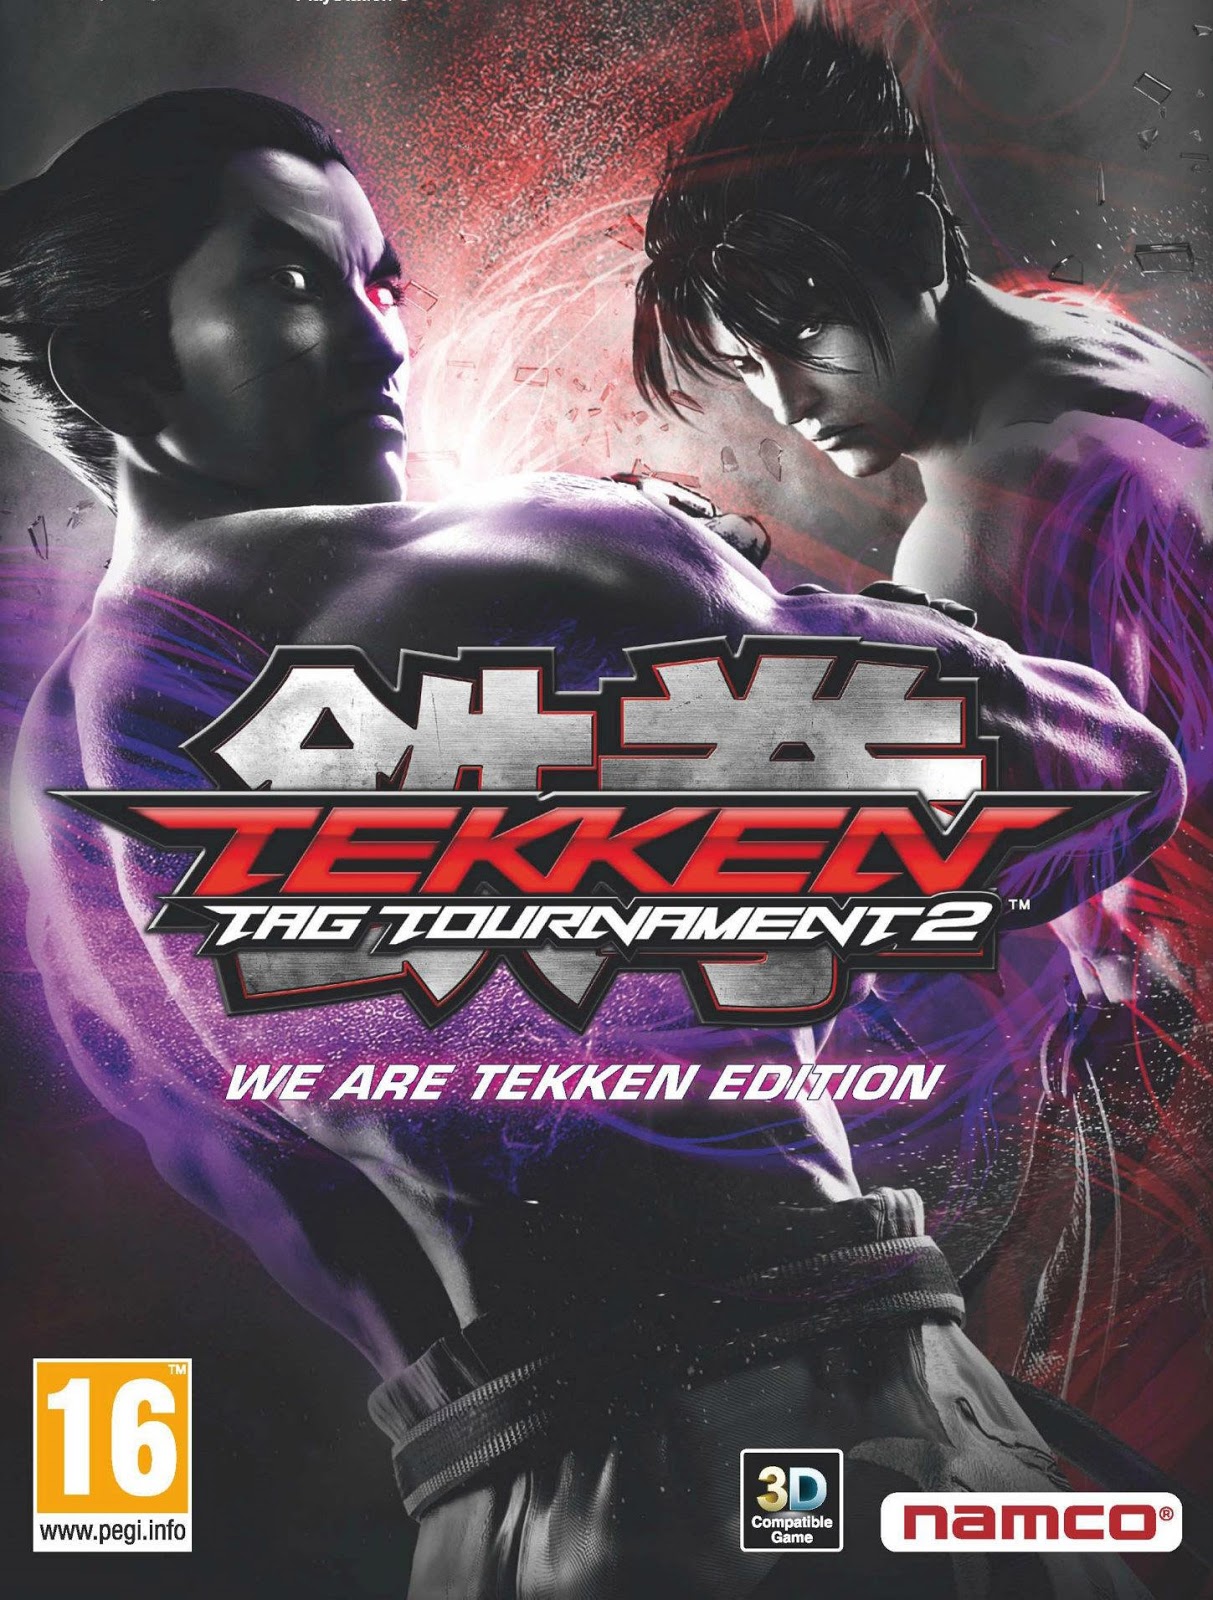 Tekken tag tournament 3 download pc